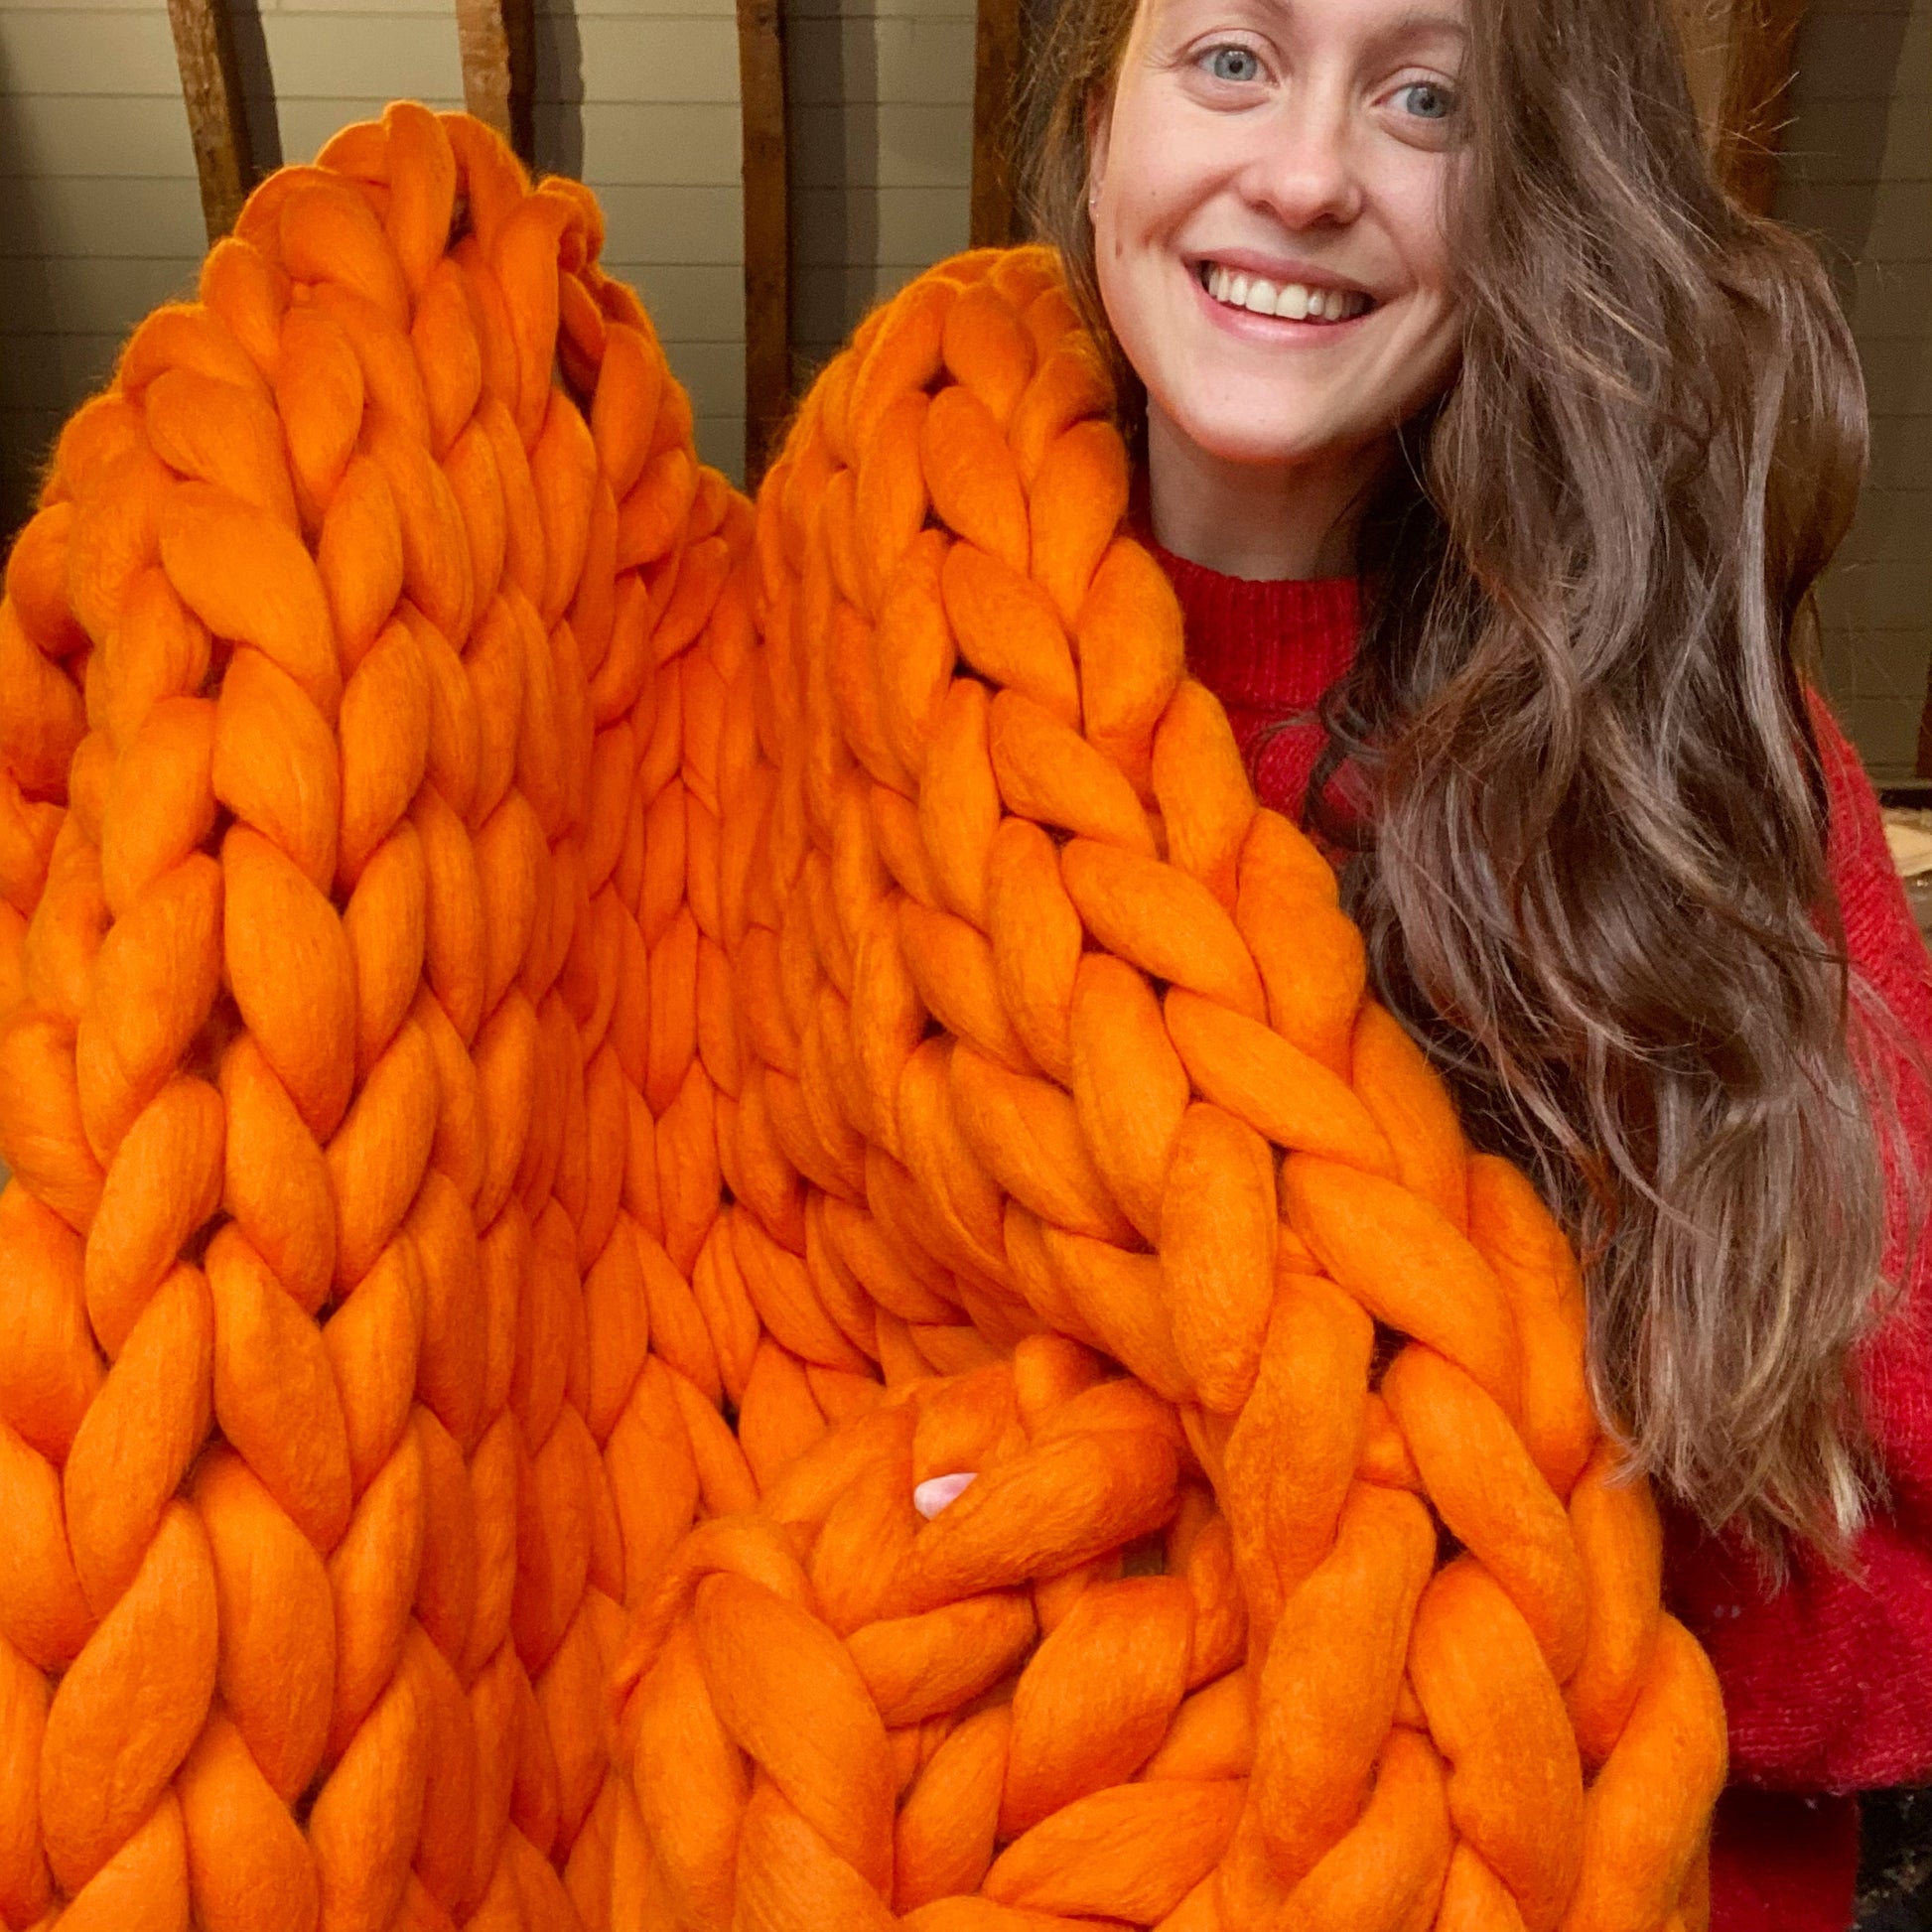 Blanket Arm Knitting Workshop - Saturday 9th March 10am - WatersHaus